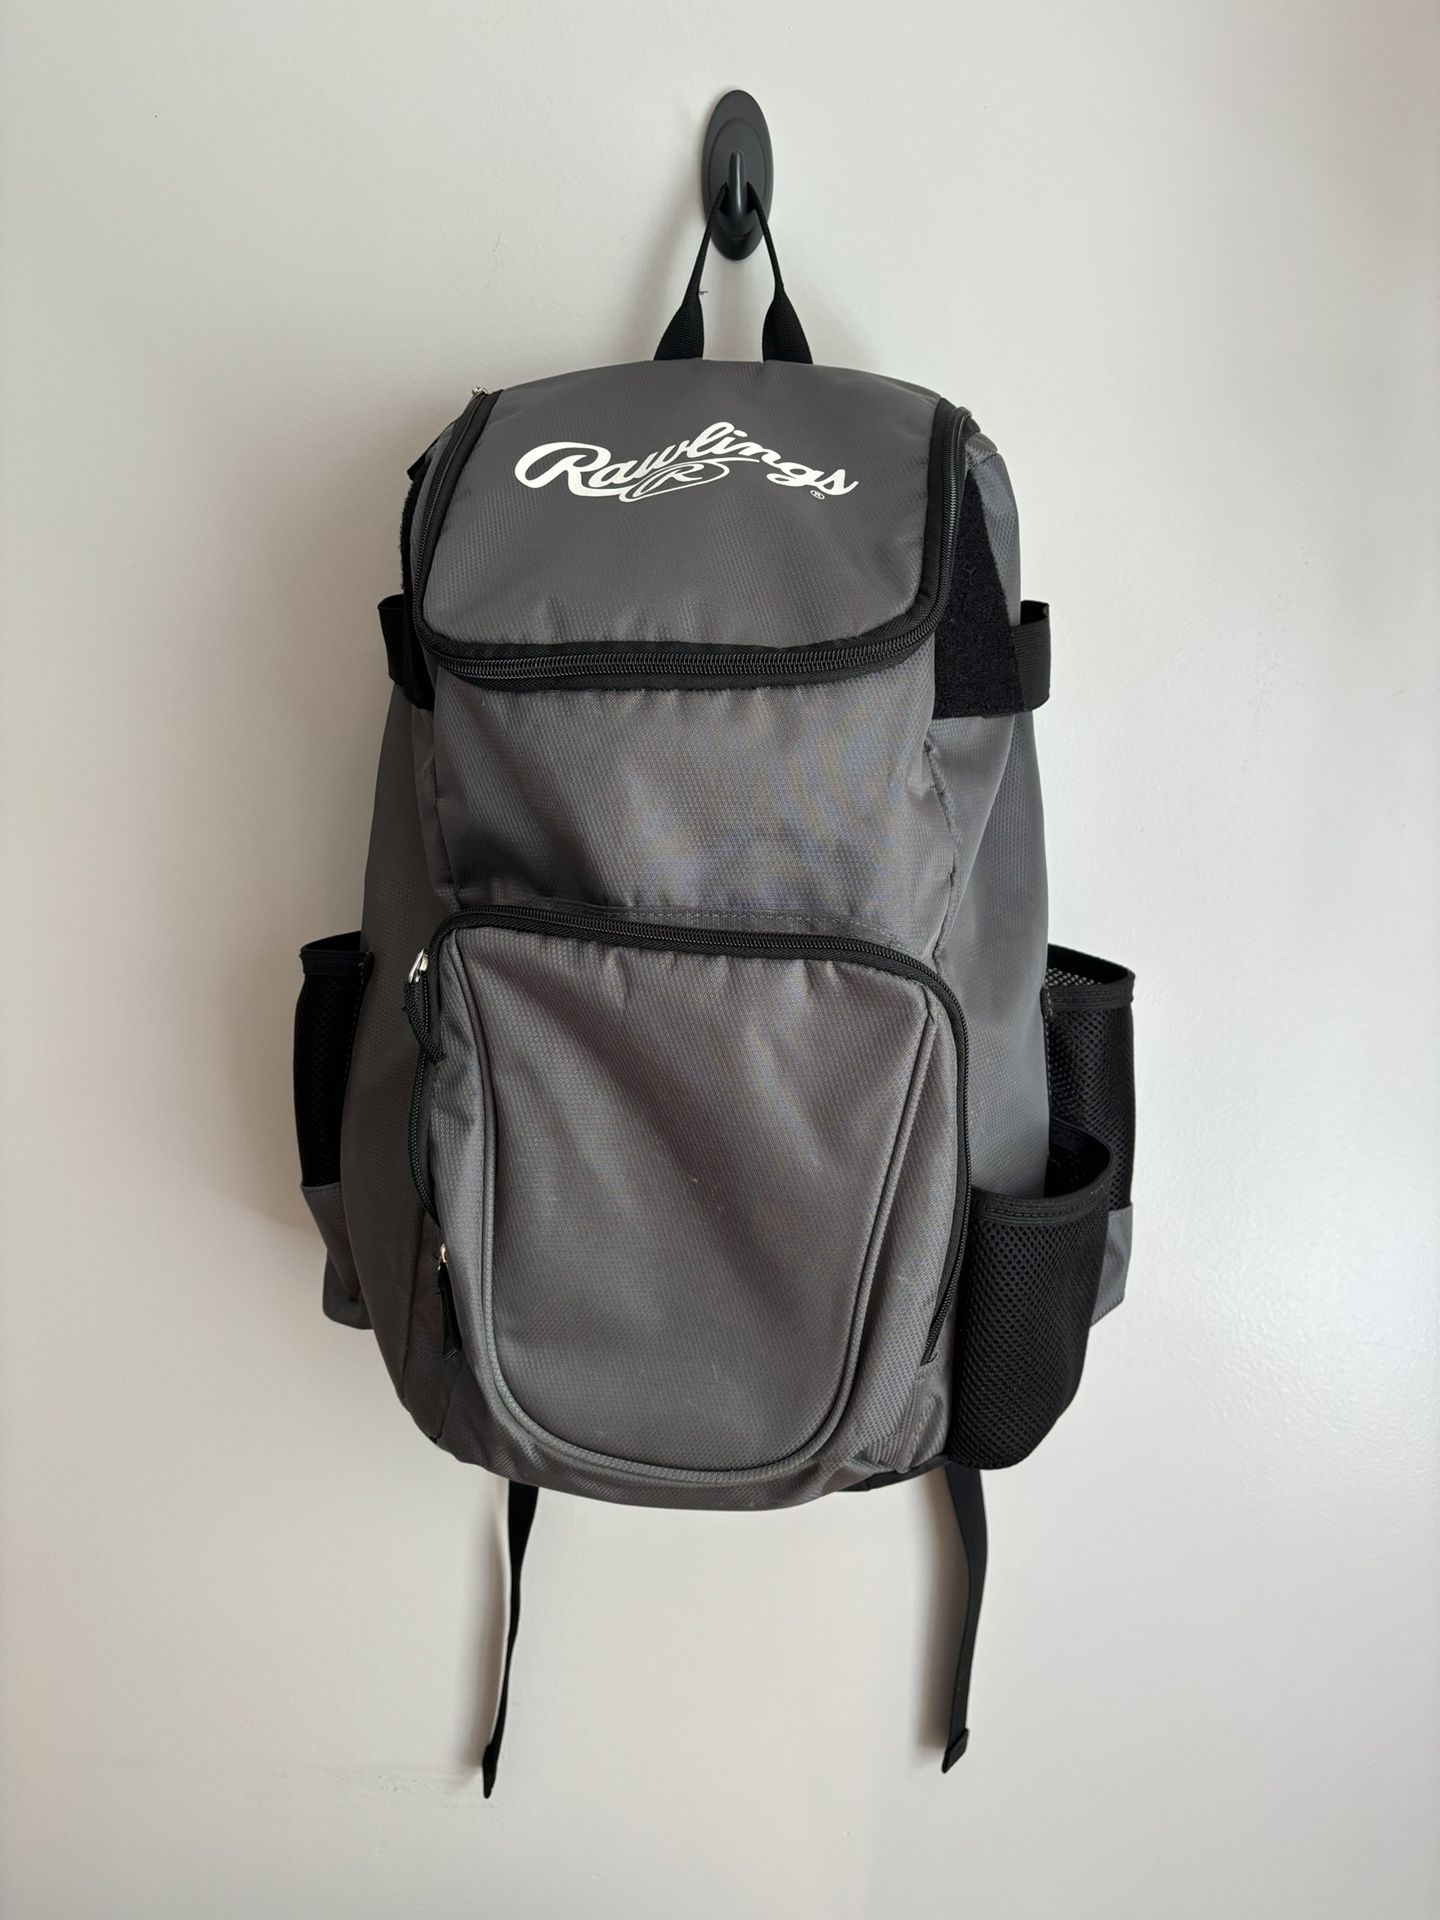 Rawlings Large Backpack Bat Bag Baseball Softball Gray Equipment Gear Travel